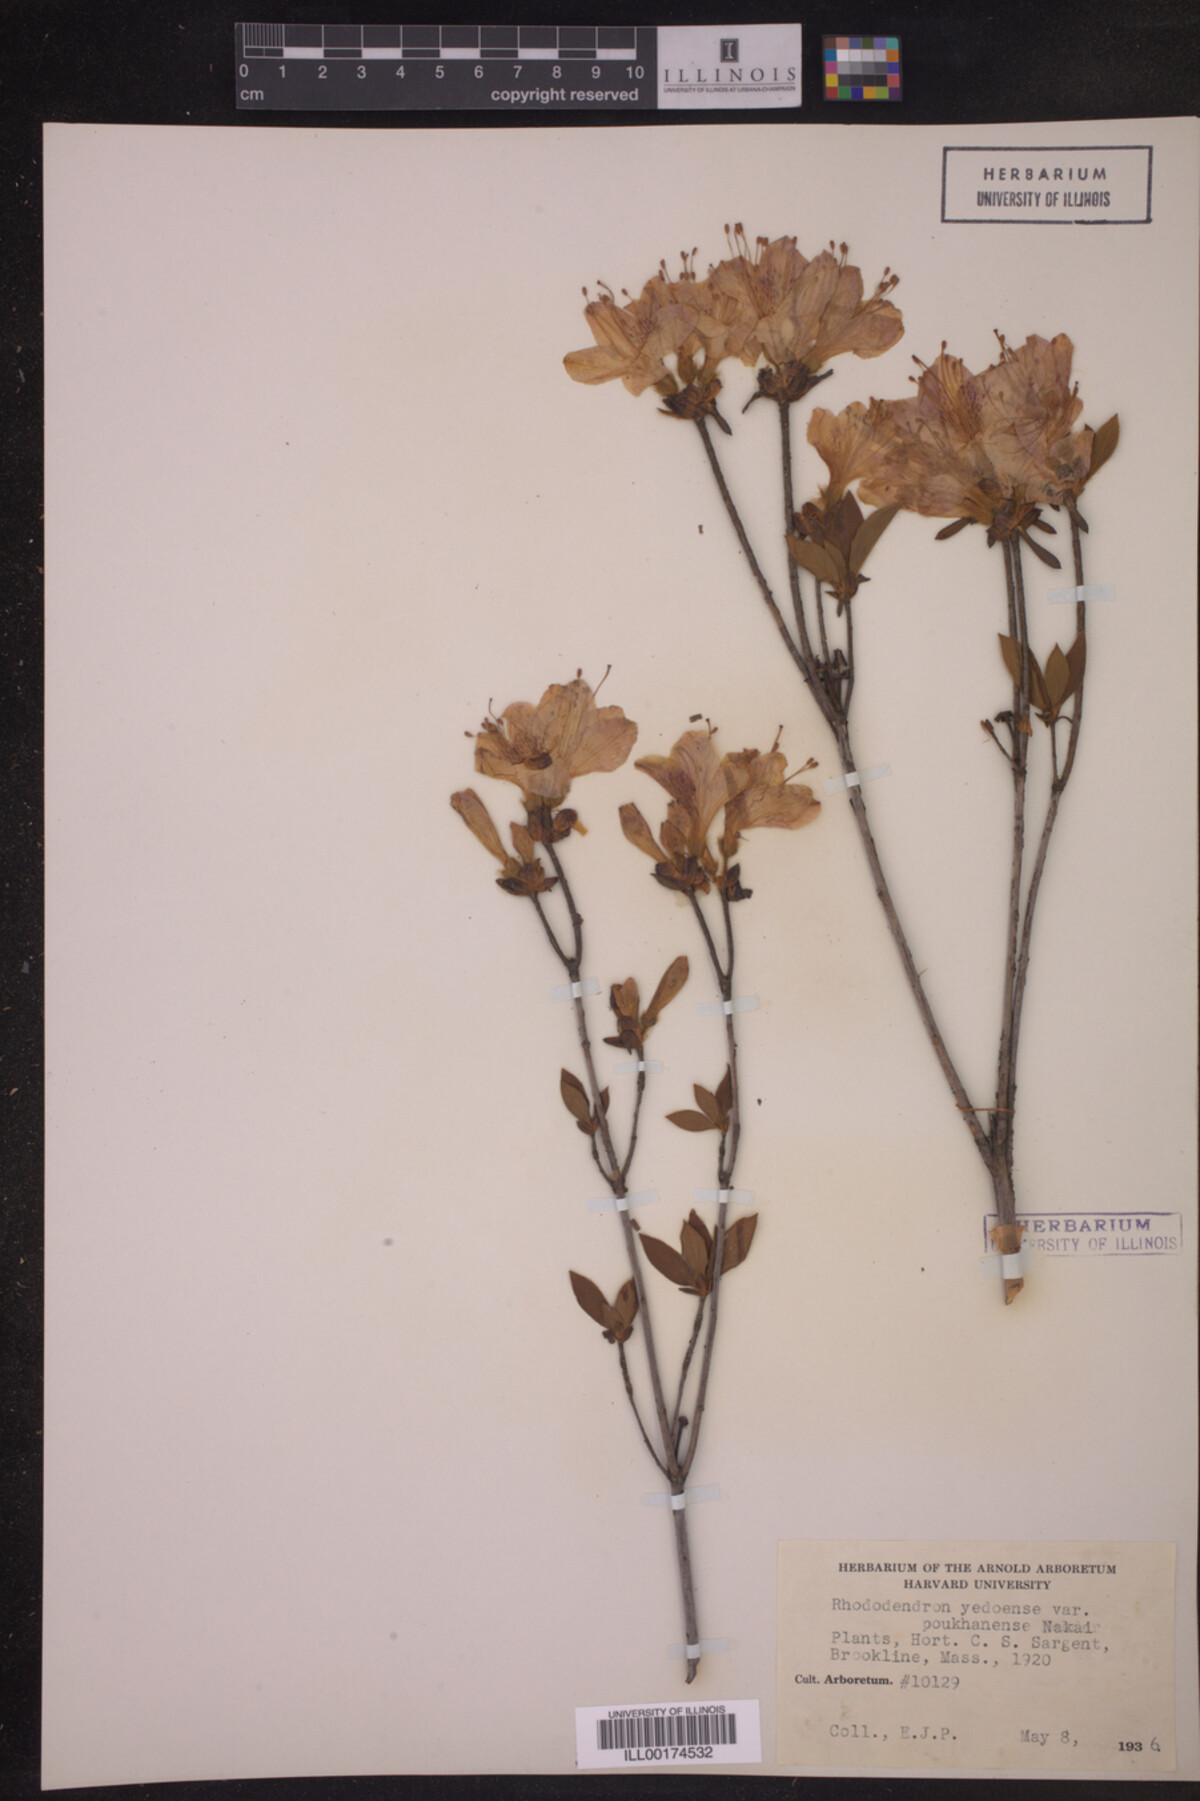 Rhododendron yedoense var. poukhanense image